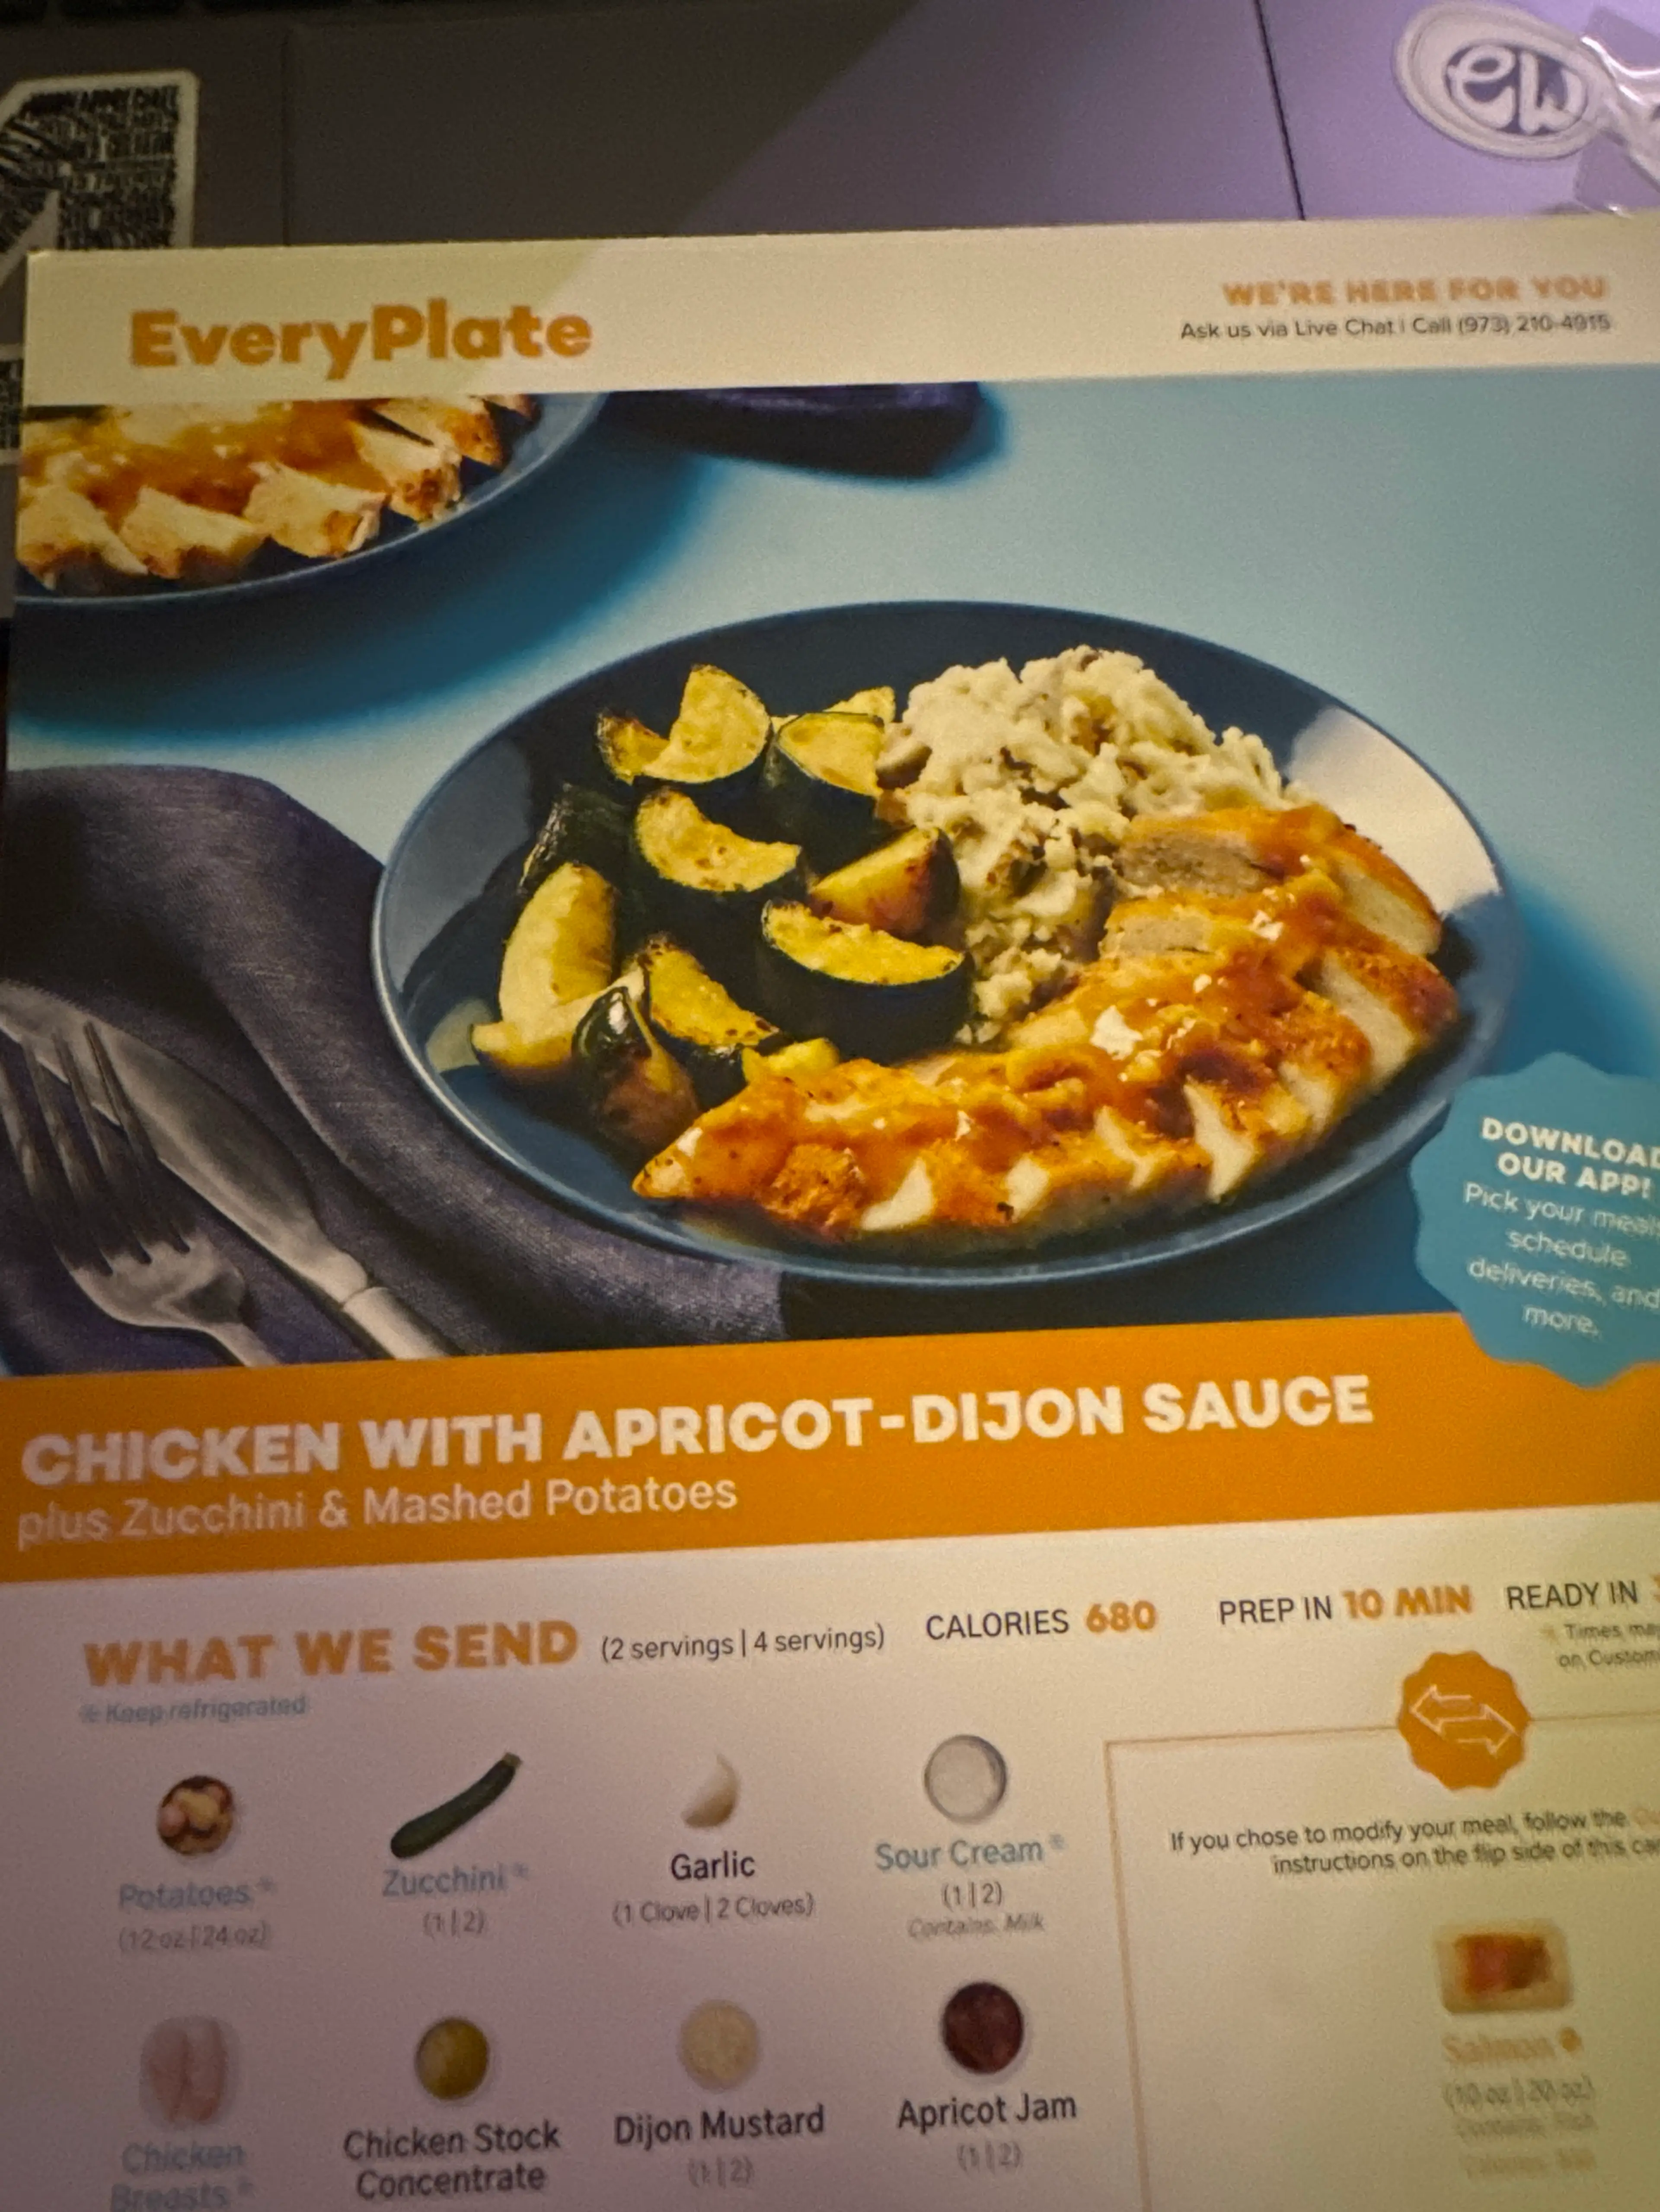 CHICKEN WITH APRICOT-DIJON plus Zucchini & Mashed Potatoes